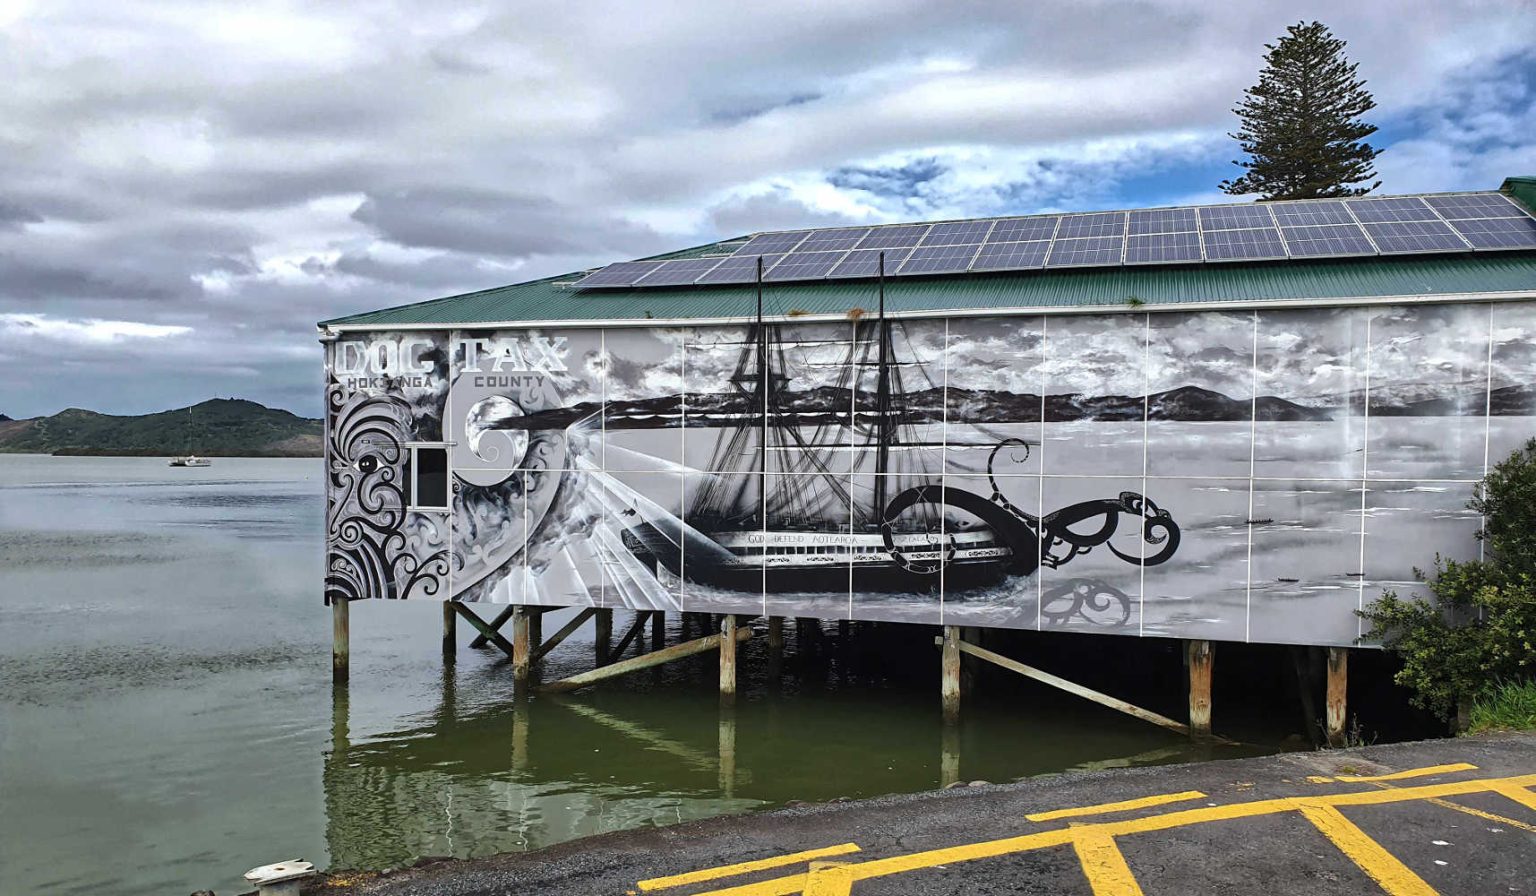 Rawene Boat Shed Cafe, Northland, NZ